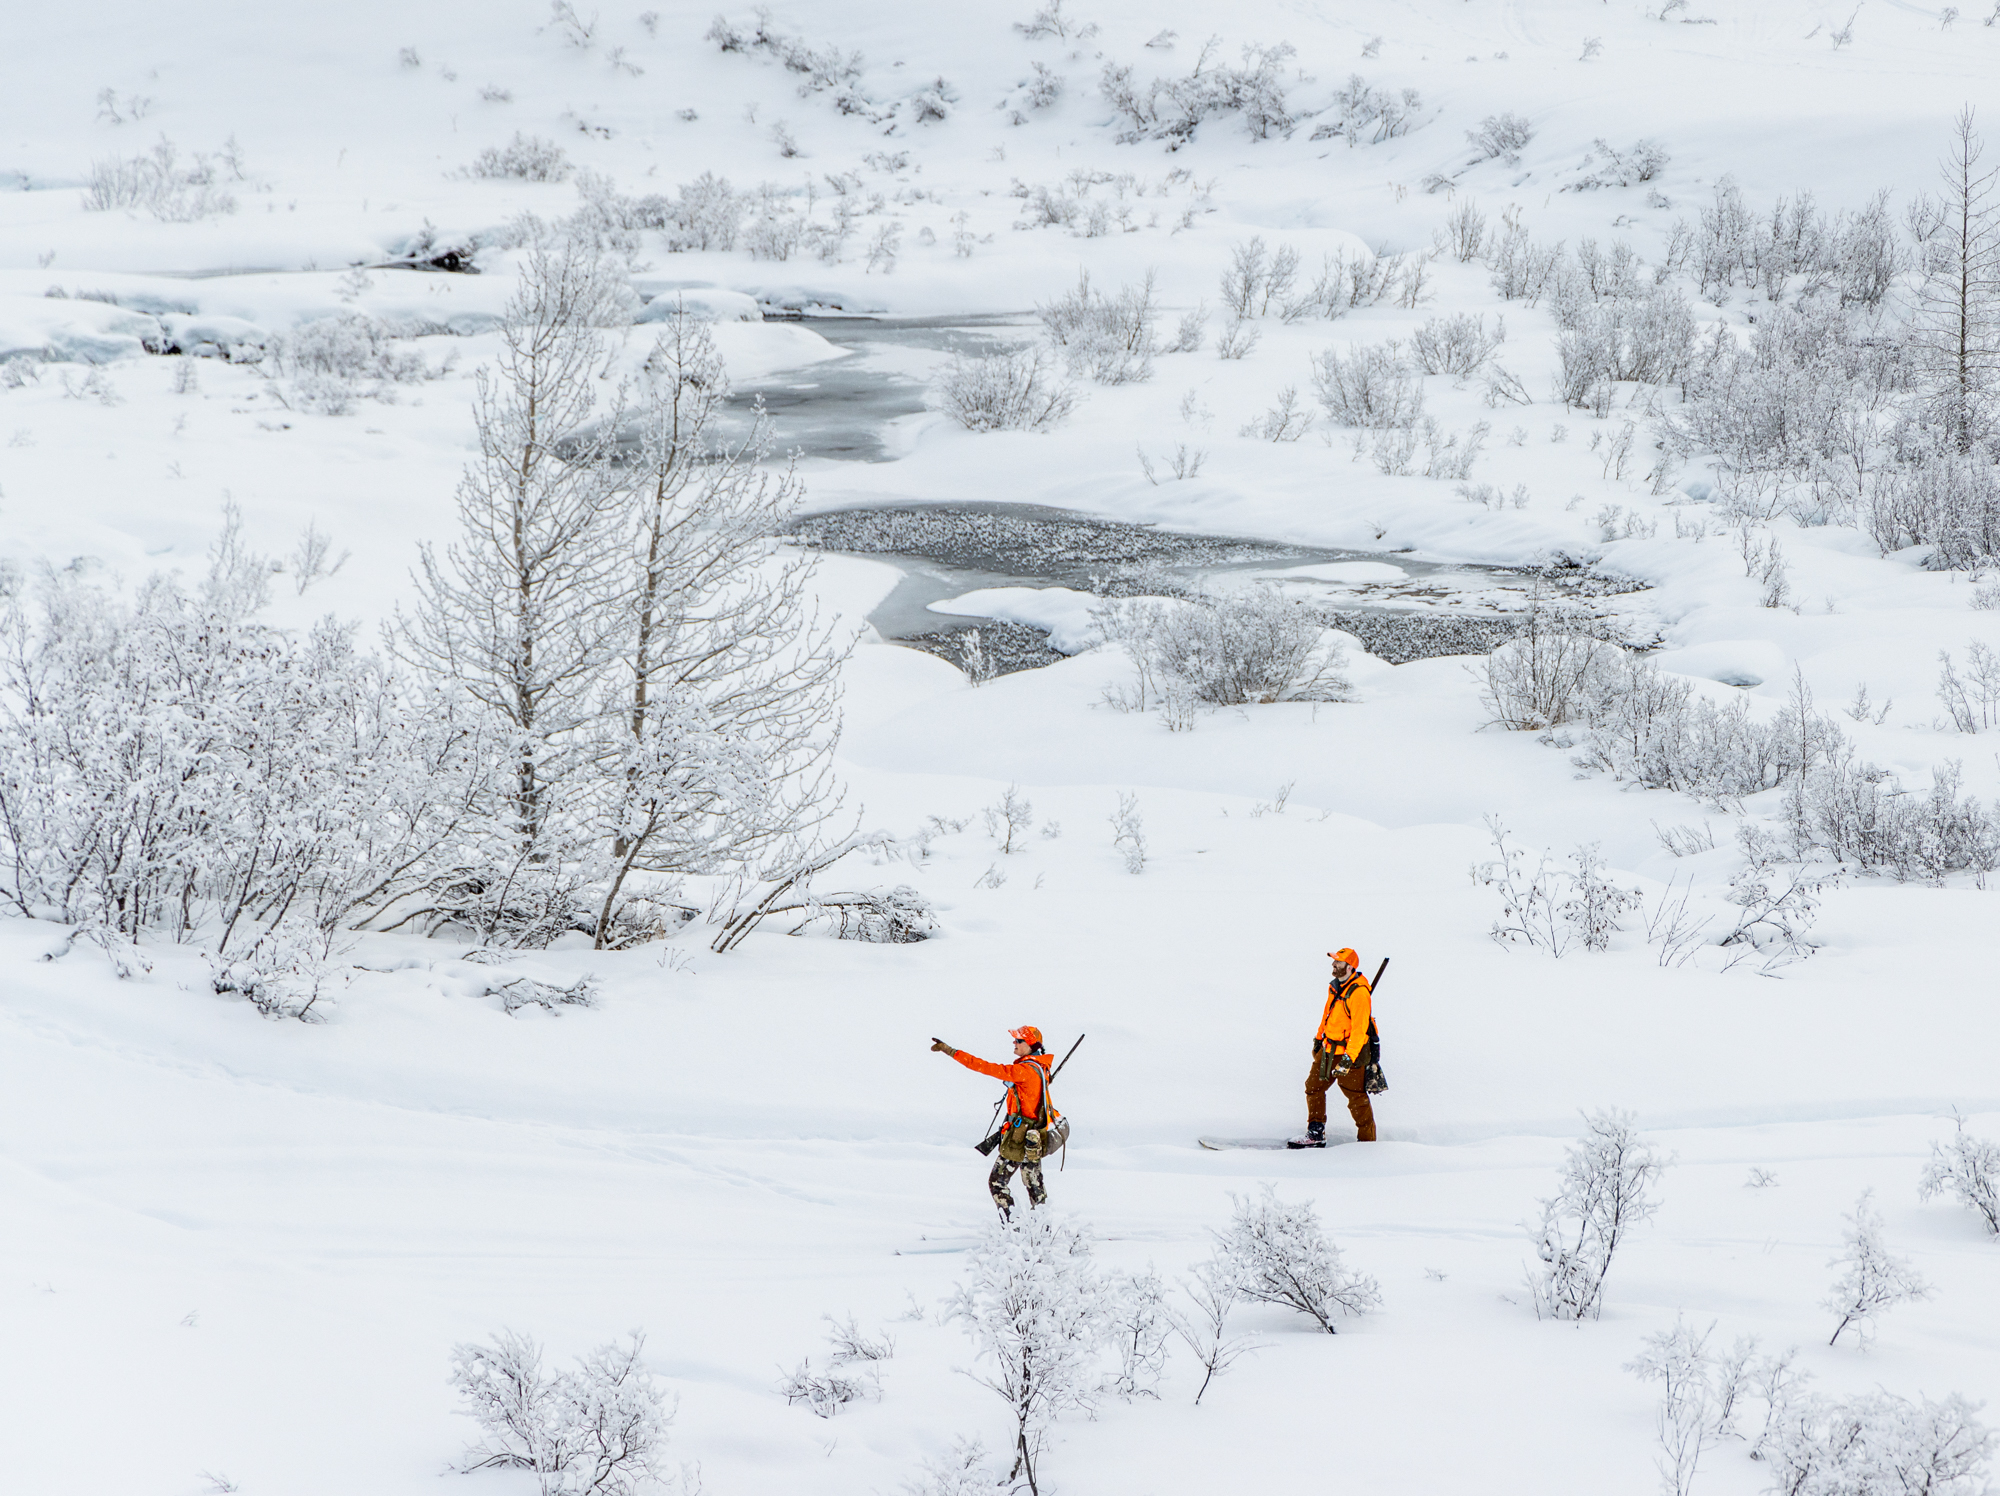 Two ski-hunters in a snowy landscape.